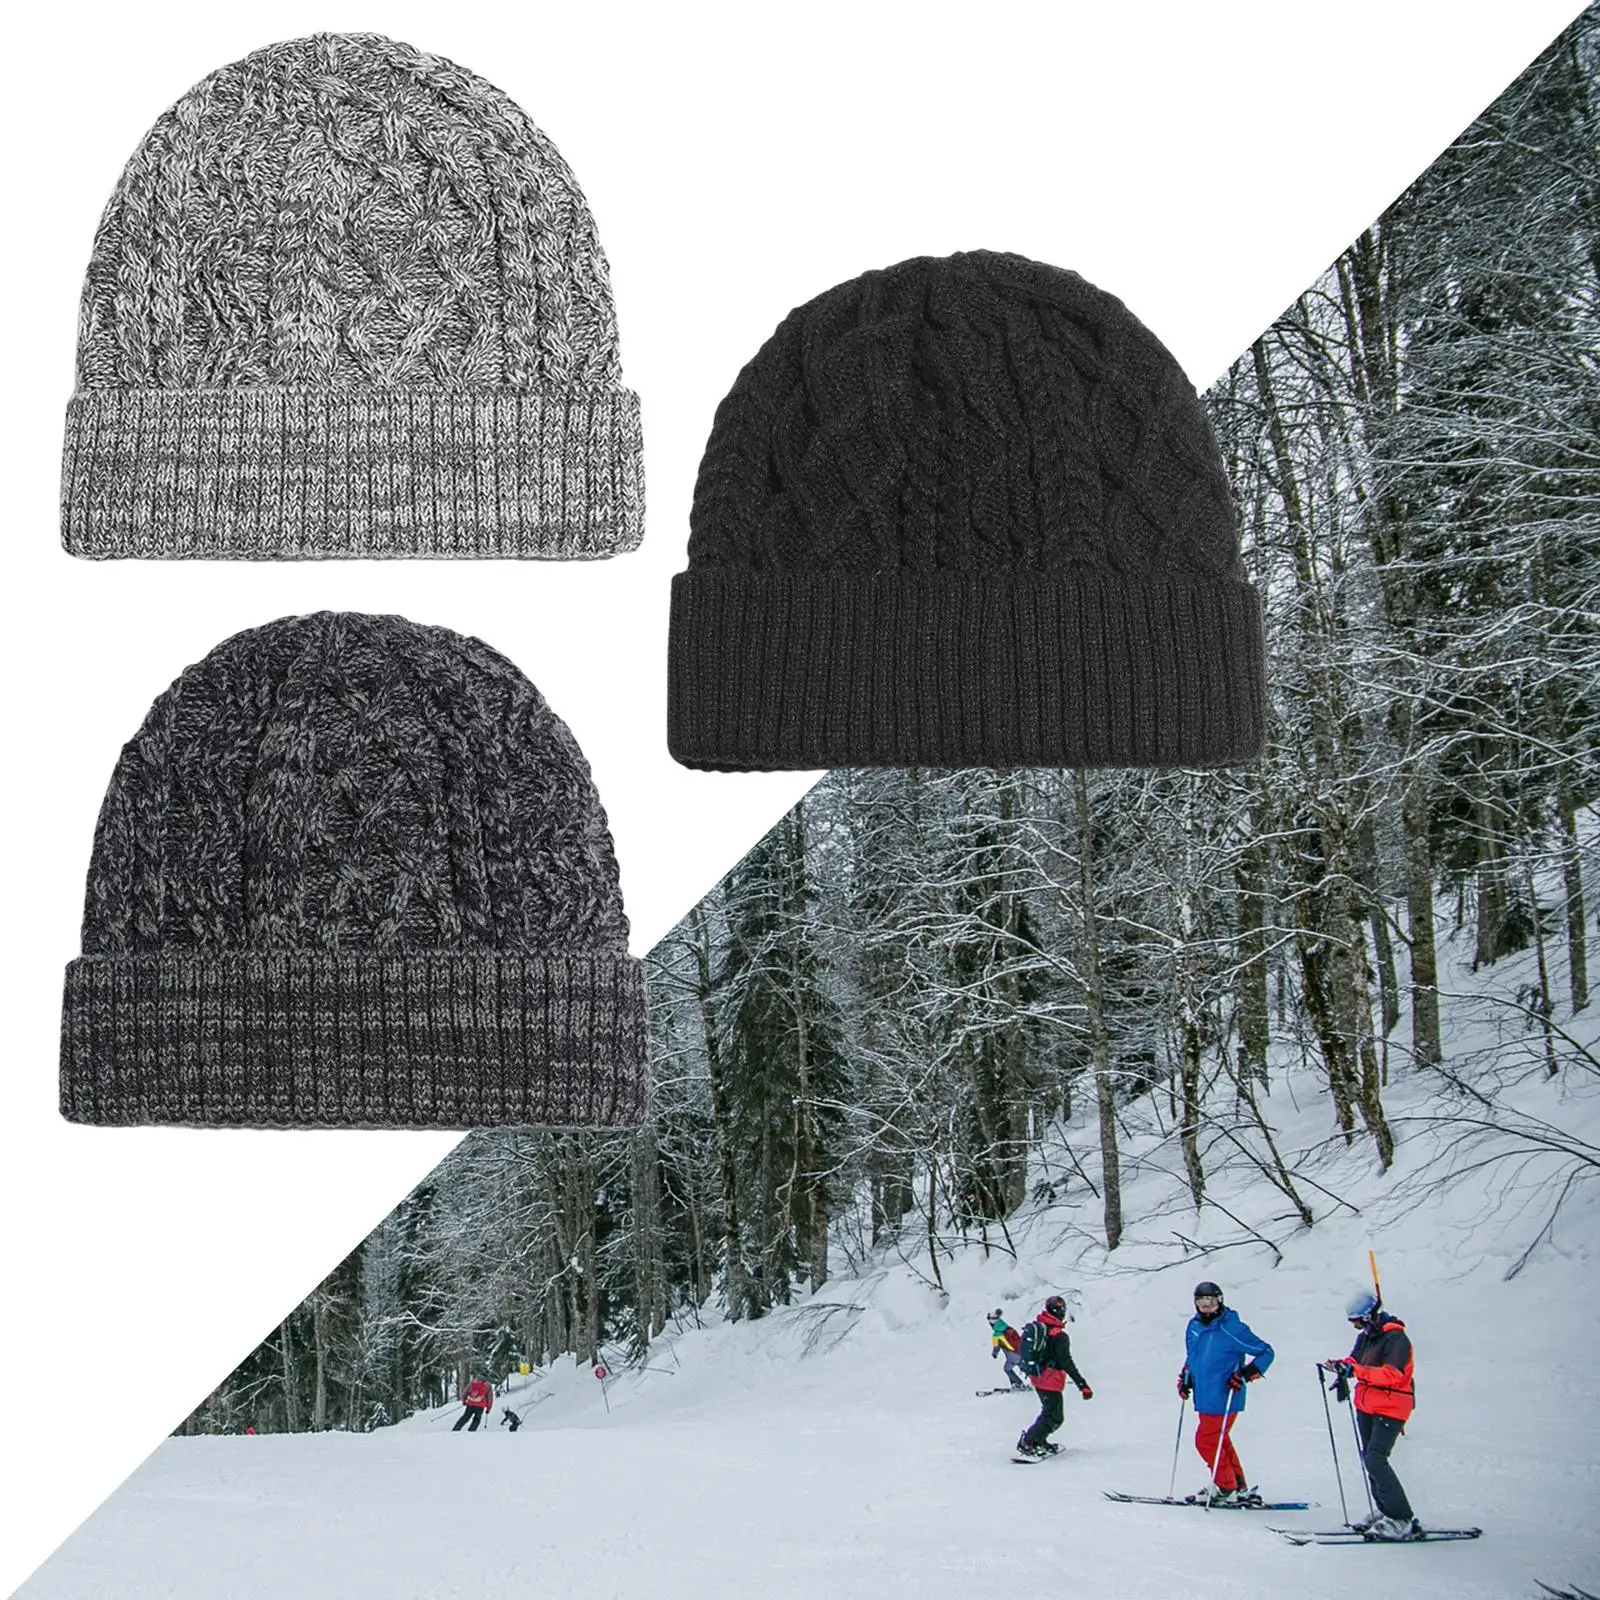 Men`s Winter Hats Knit Cuff Beanie Caps Warm Daily Beanie Hat